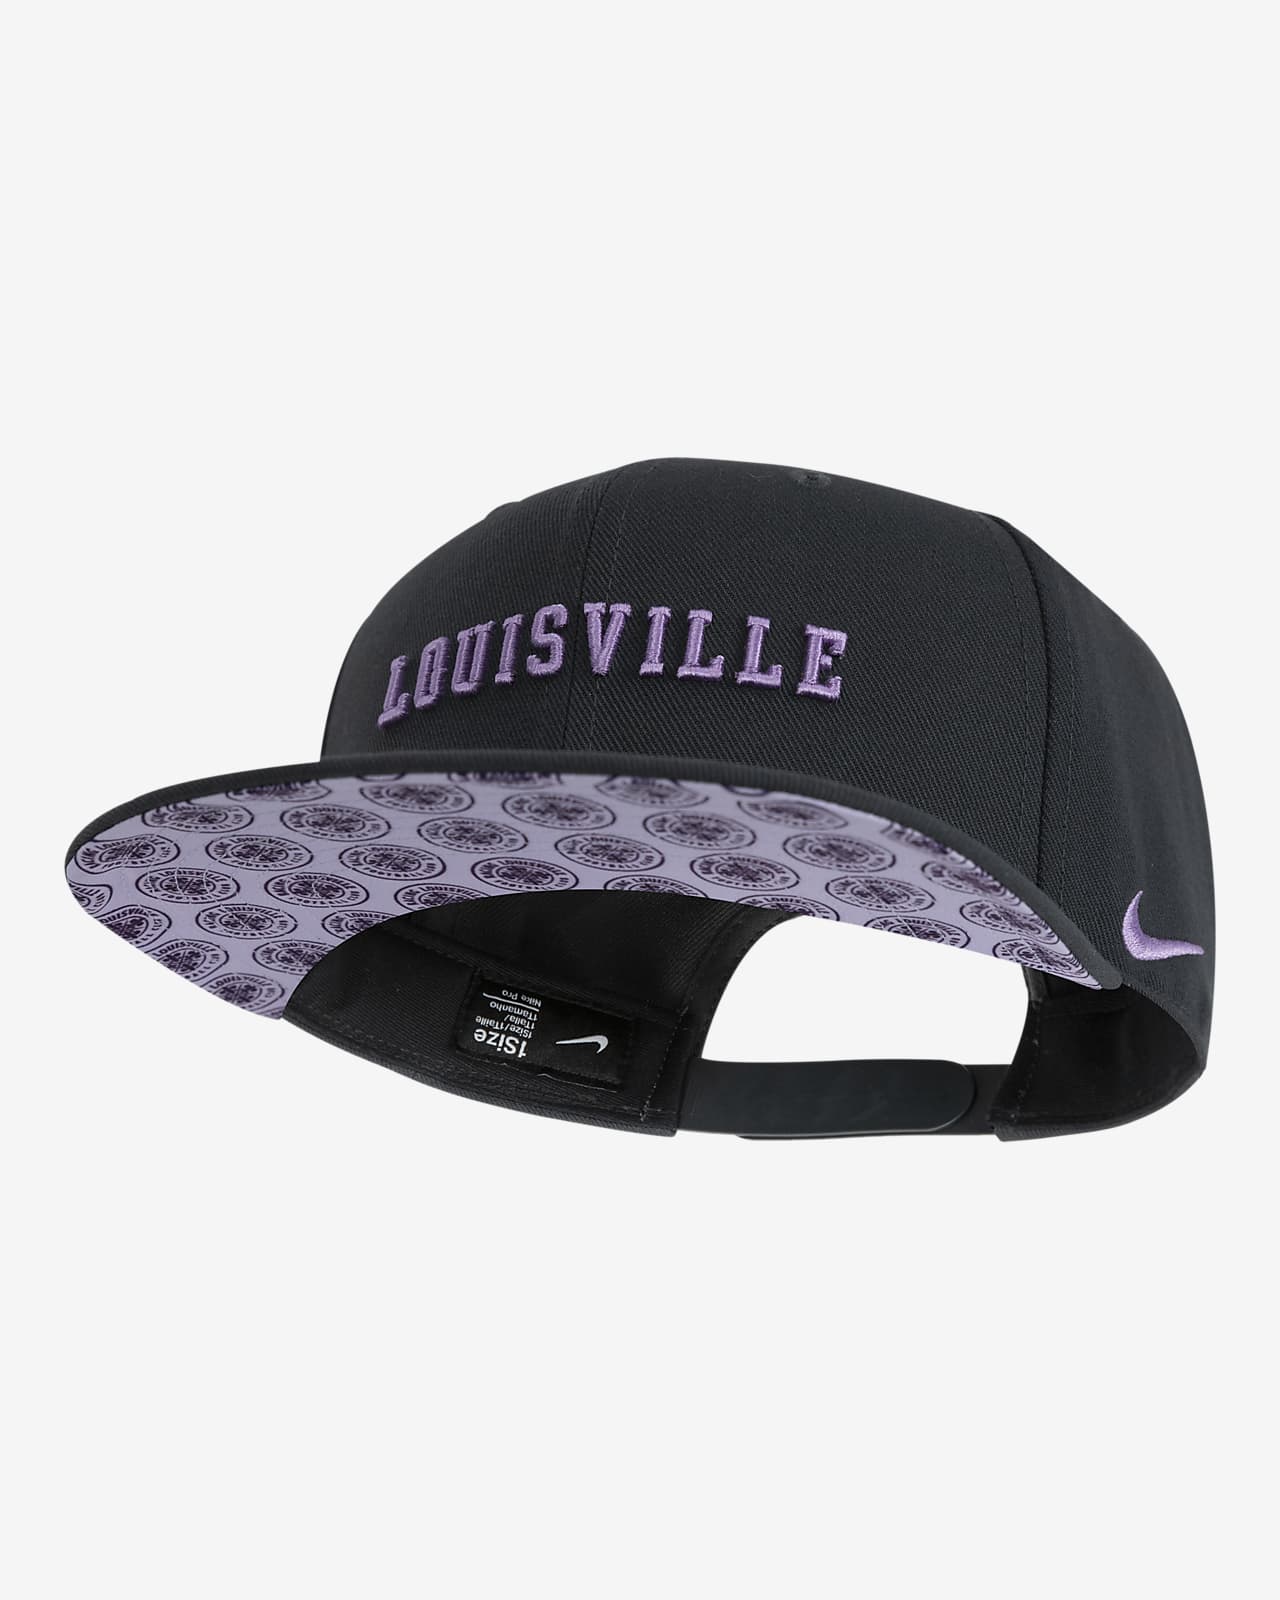 Racing Louisville Nike Soccer Hat